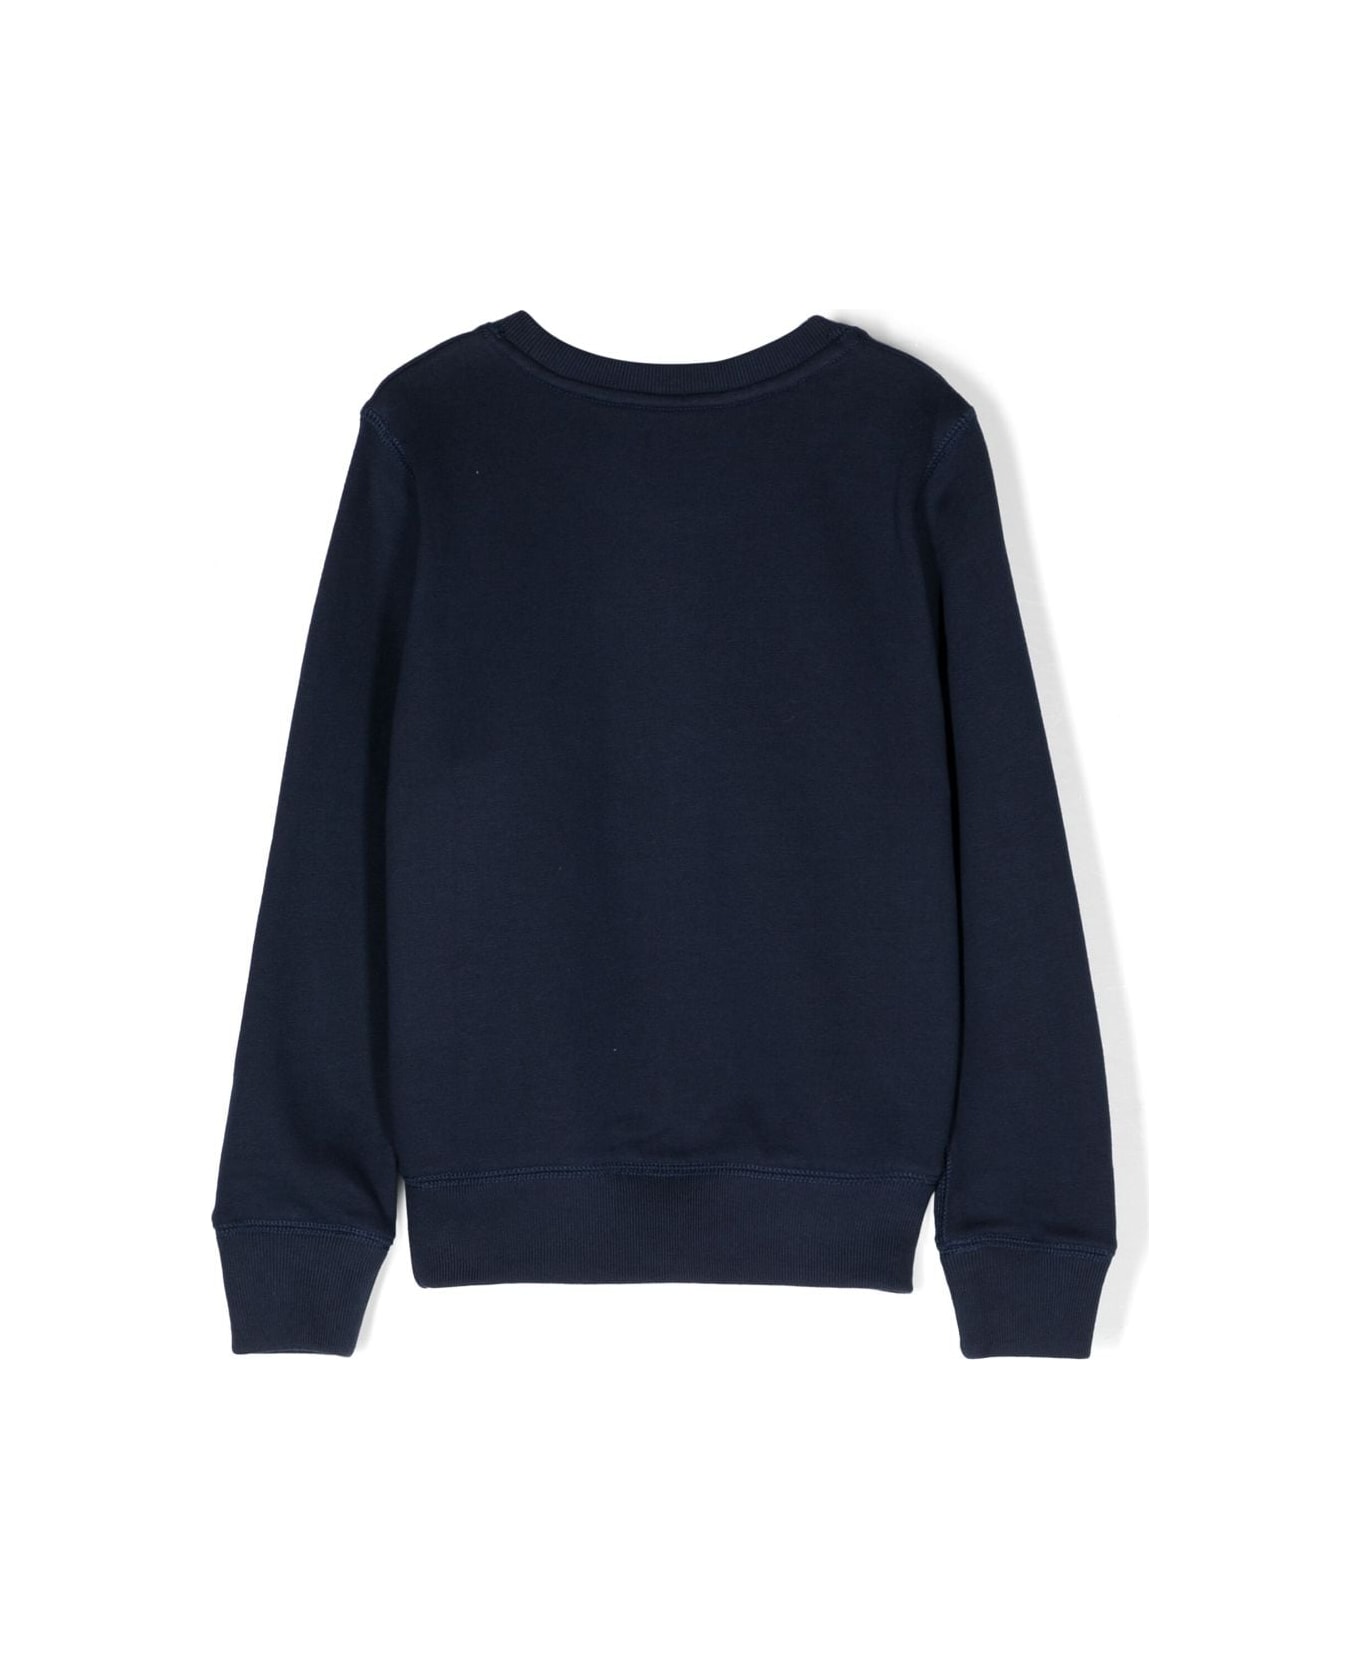 Polo Ralph Lauren Bearcnfleece Knit Shirts Sweatshirt - French Navy